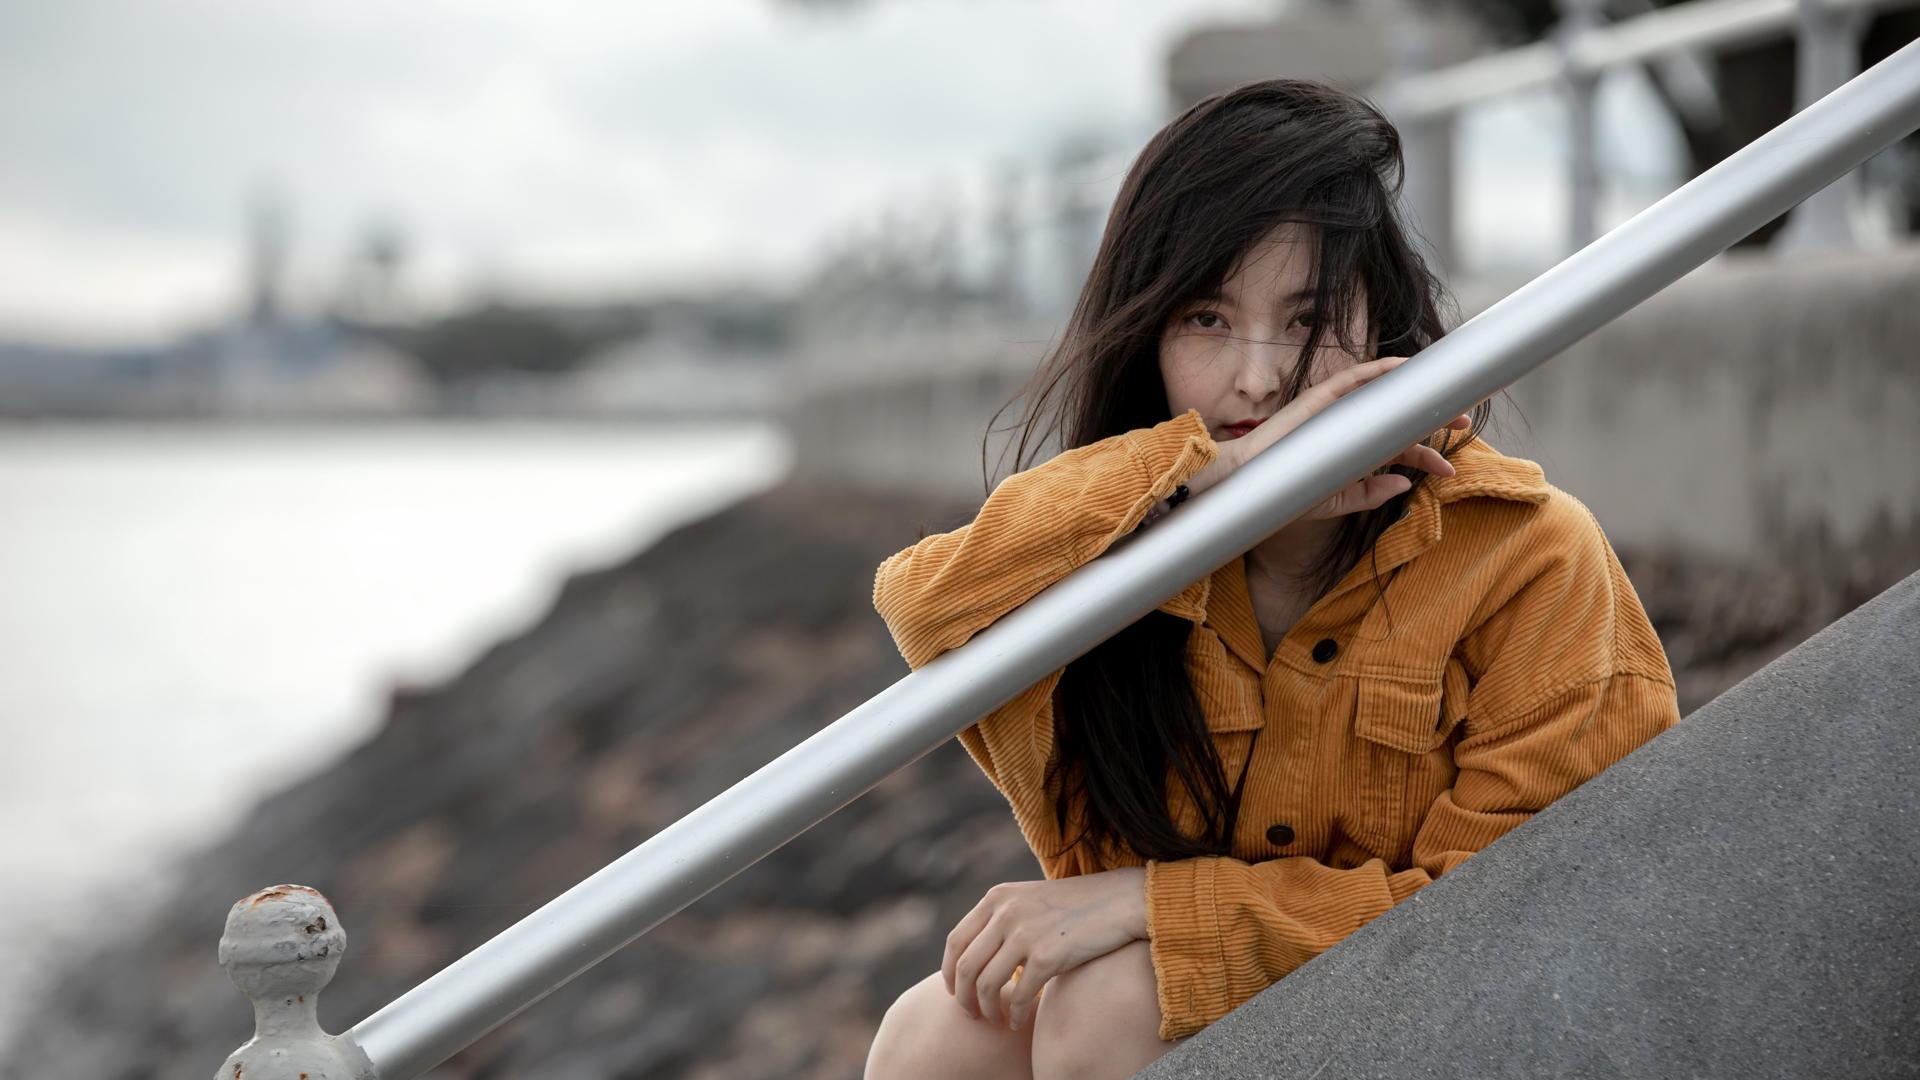 Asian Model Women Women Outdoors Long Hair Dark Hair Depth Of Field Sitting Railings Stairs Jacket L 1920x1080